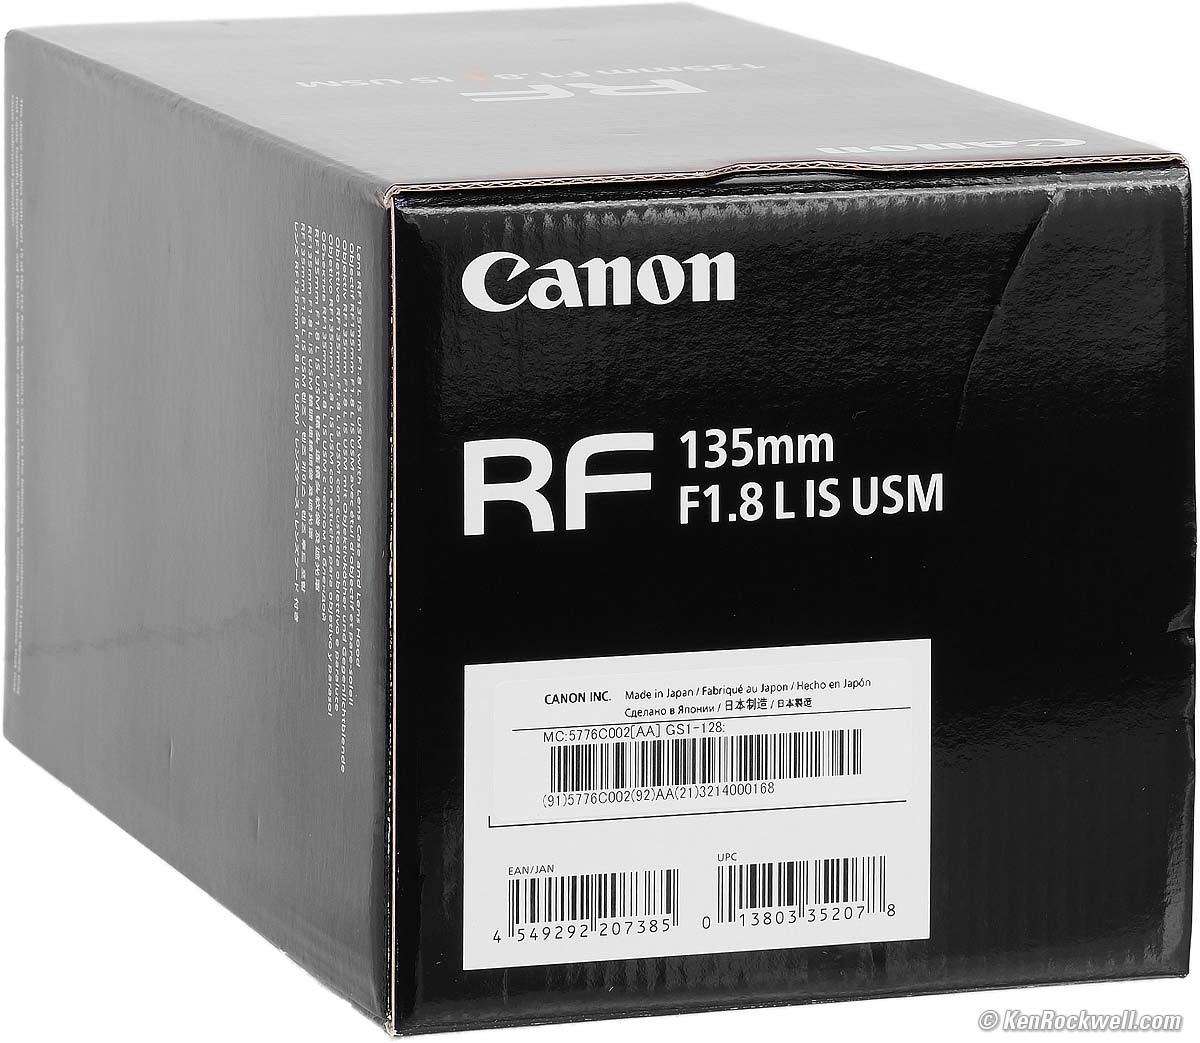 Canon RF 135mm f/1.8 L IS USM Lens 5776C002 B&H Photo Video